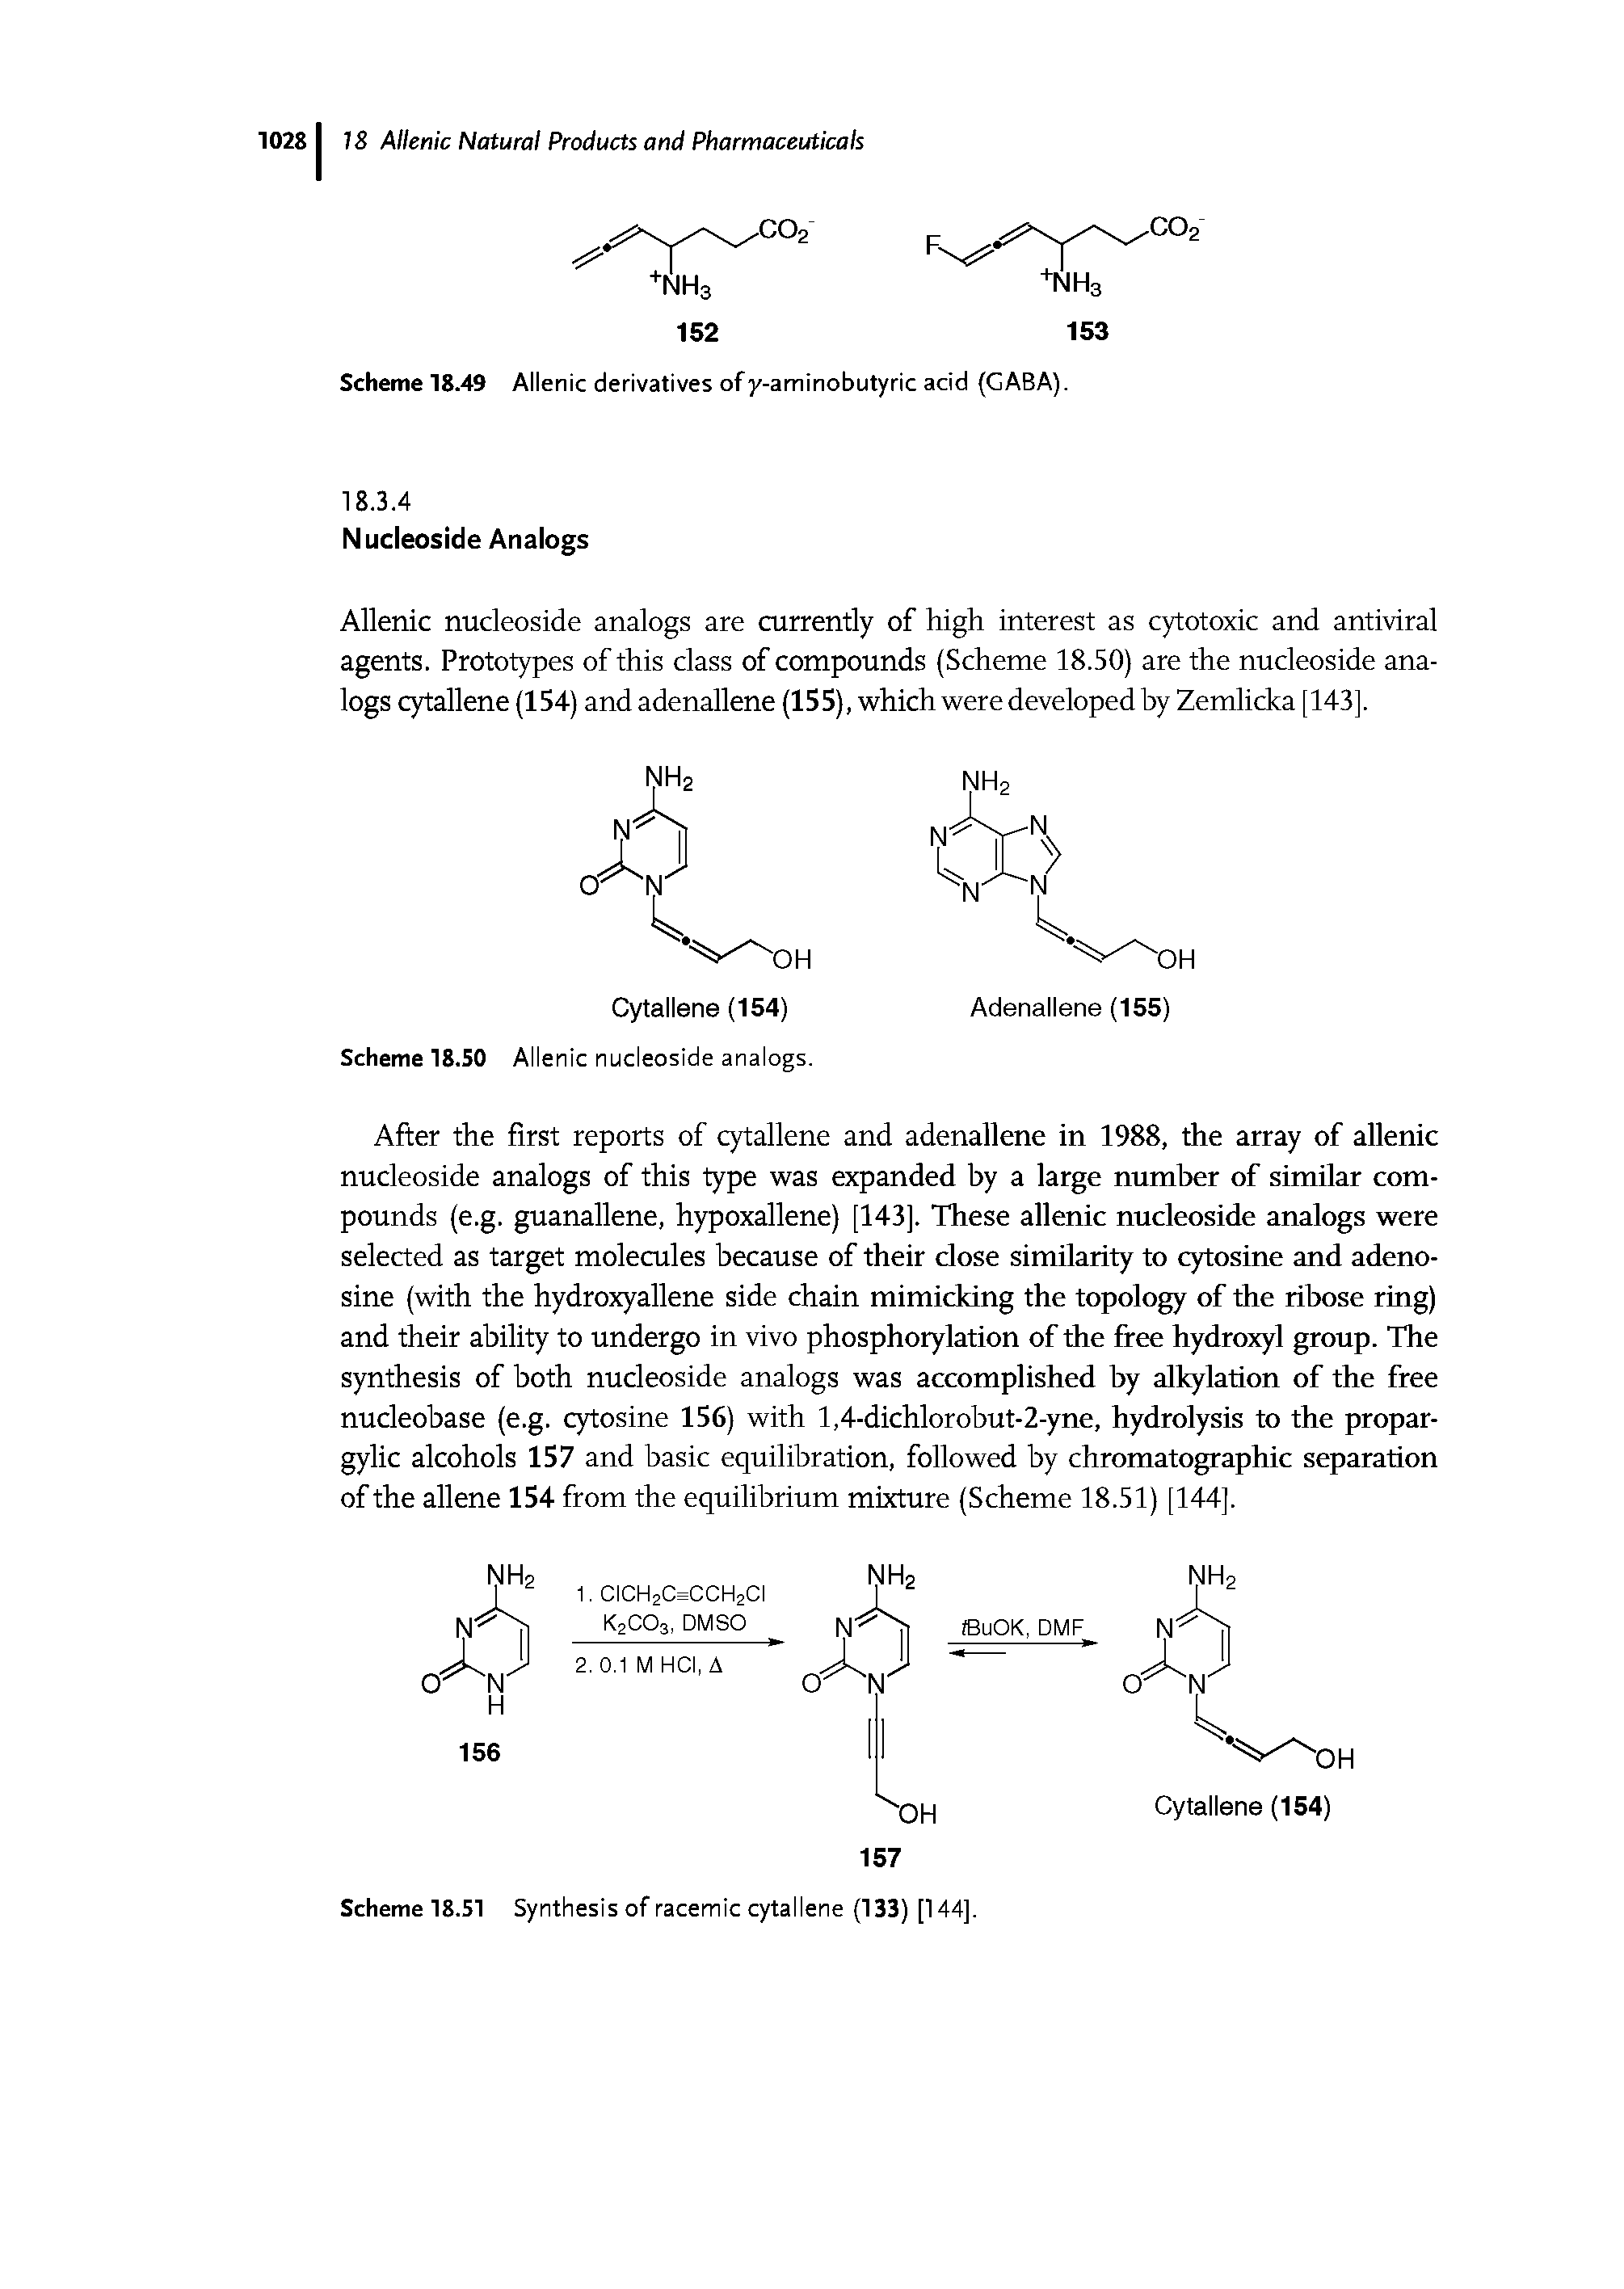 Scheme 18.49 Allenic derivatives ofy-aminobutyric acid (GABA).